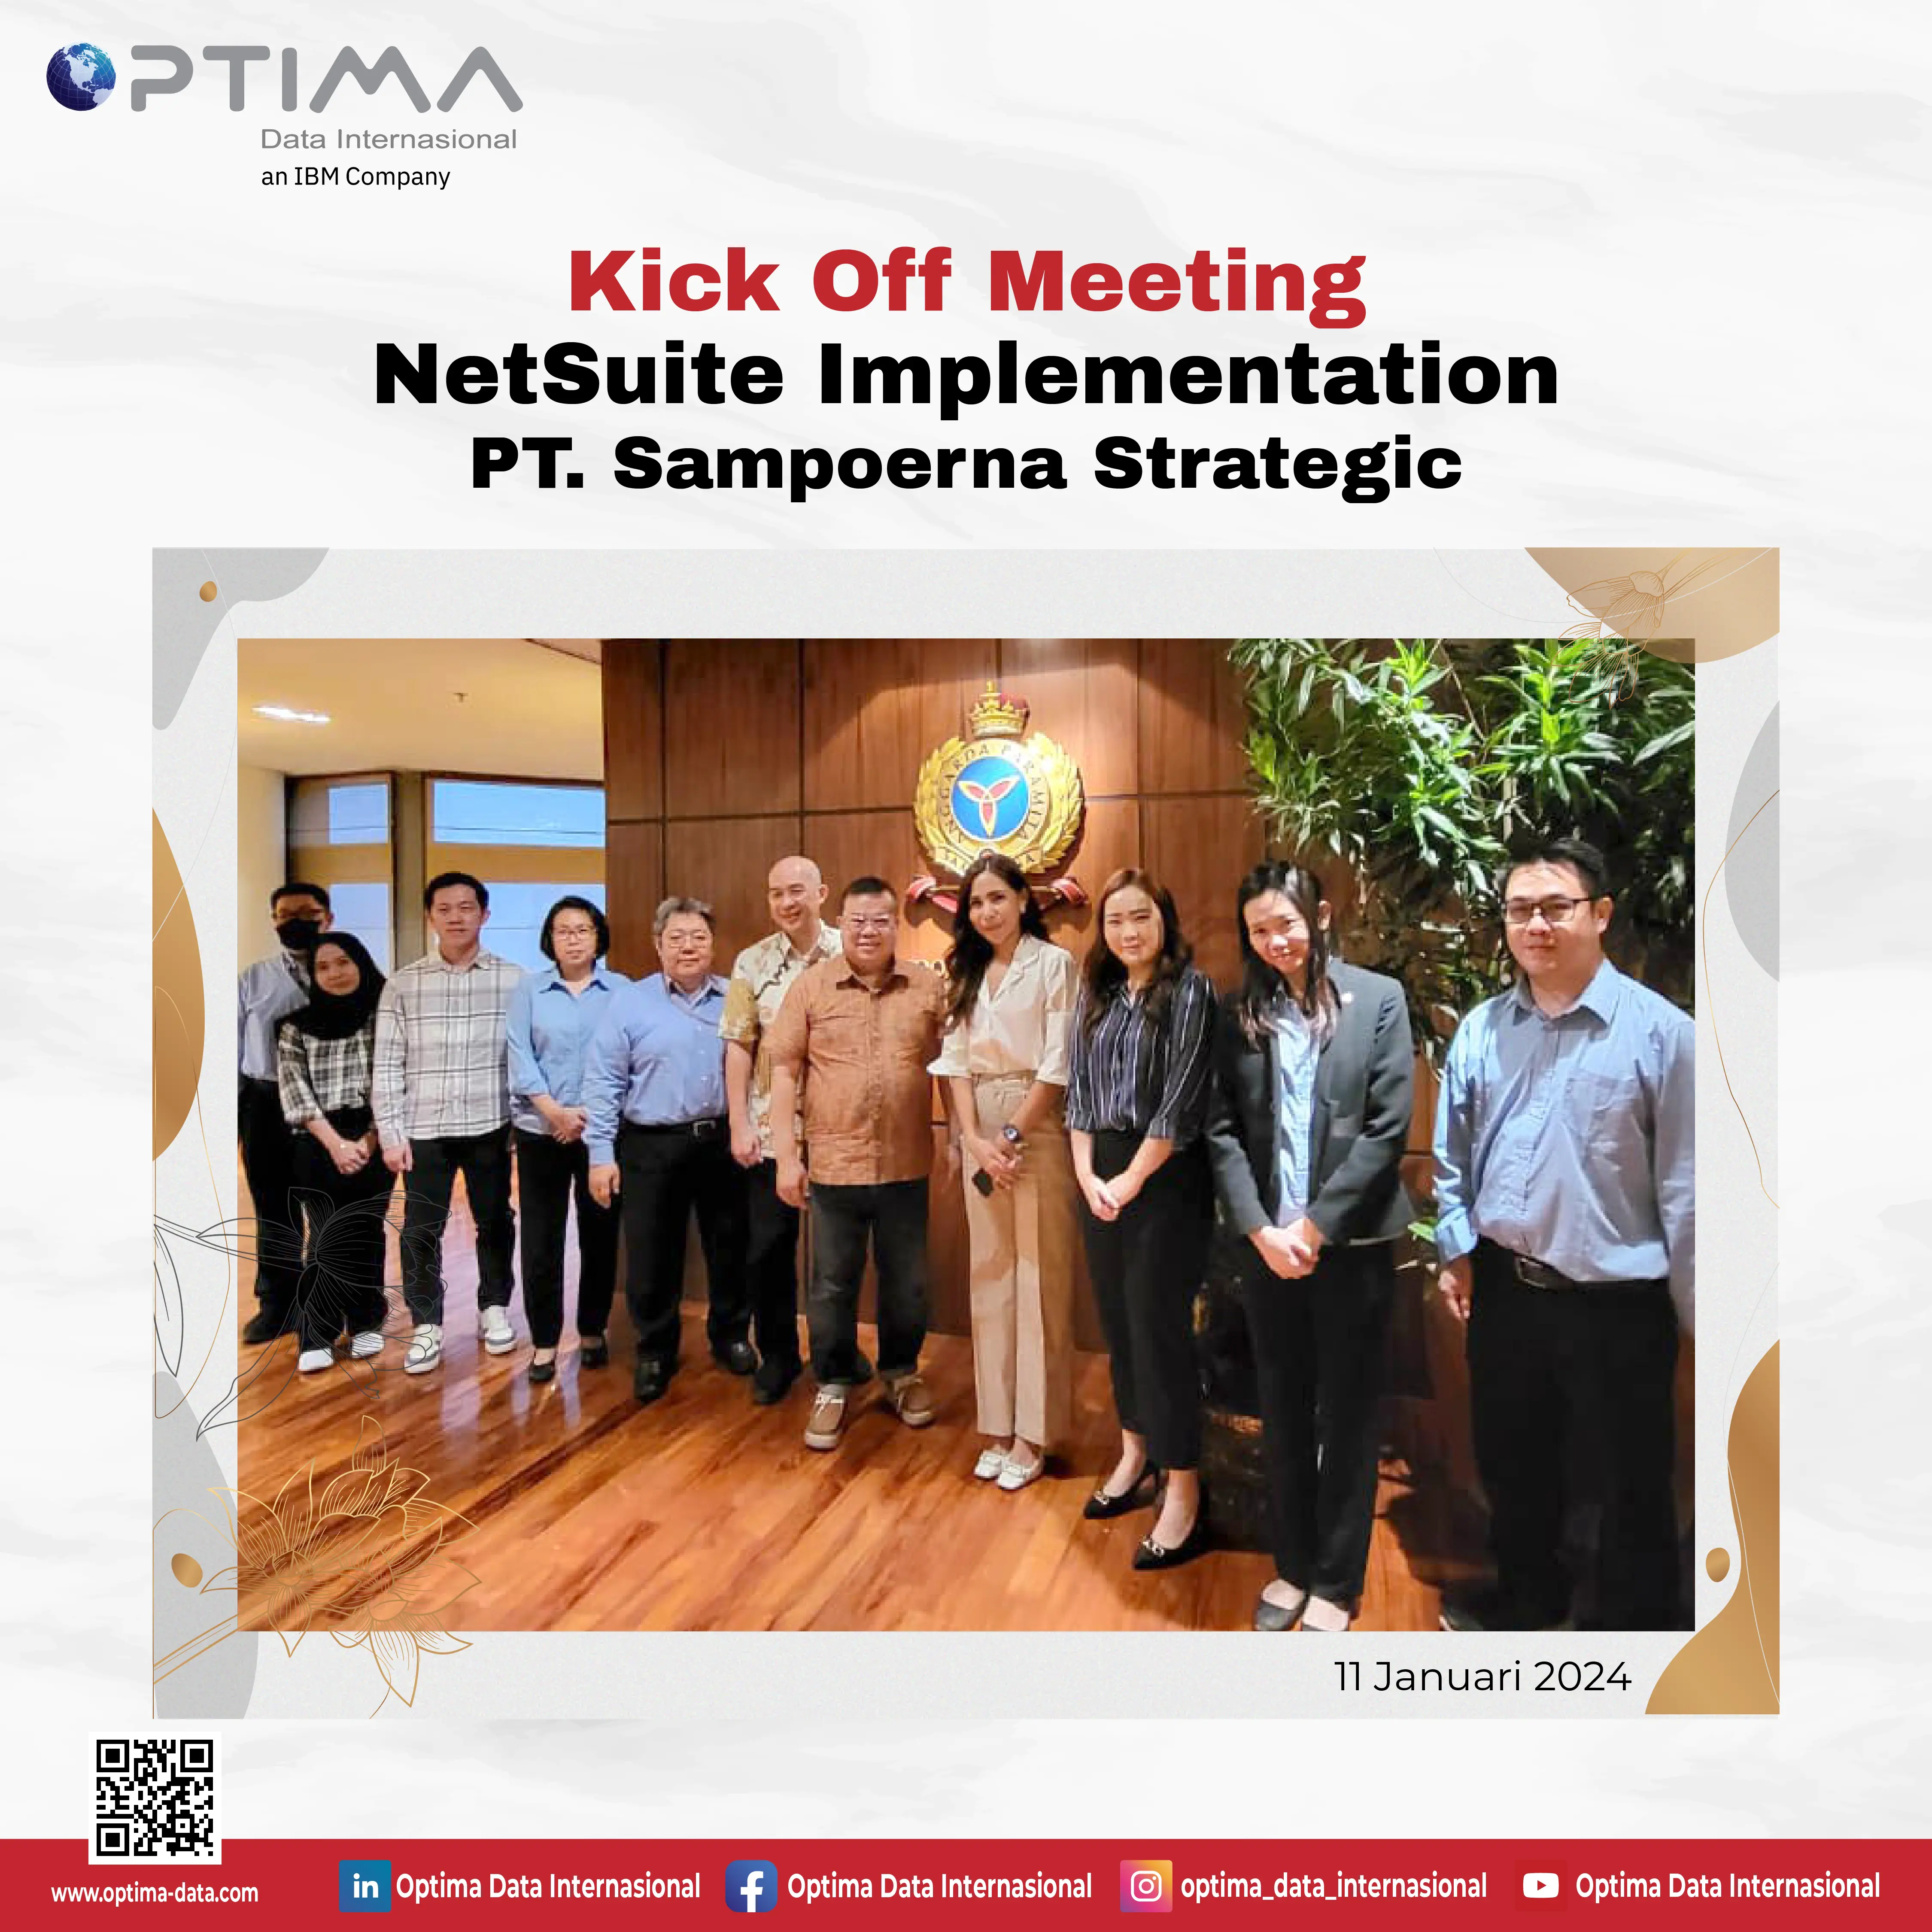 Kick Off Meeting Oracle NetSuite at PT Sampoerna Strategic